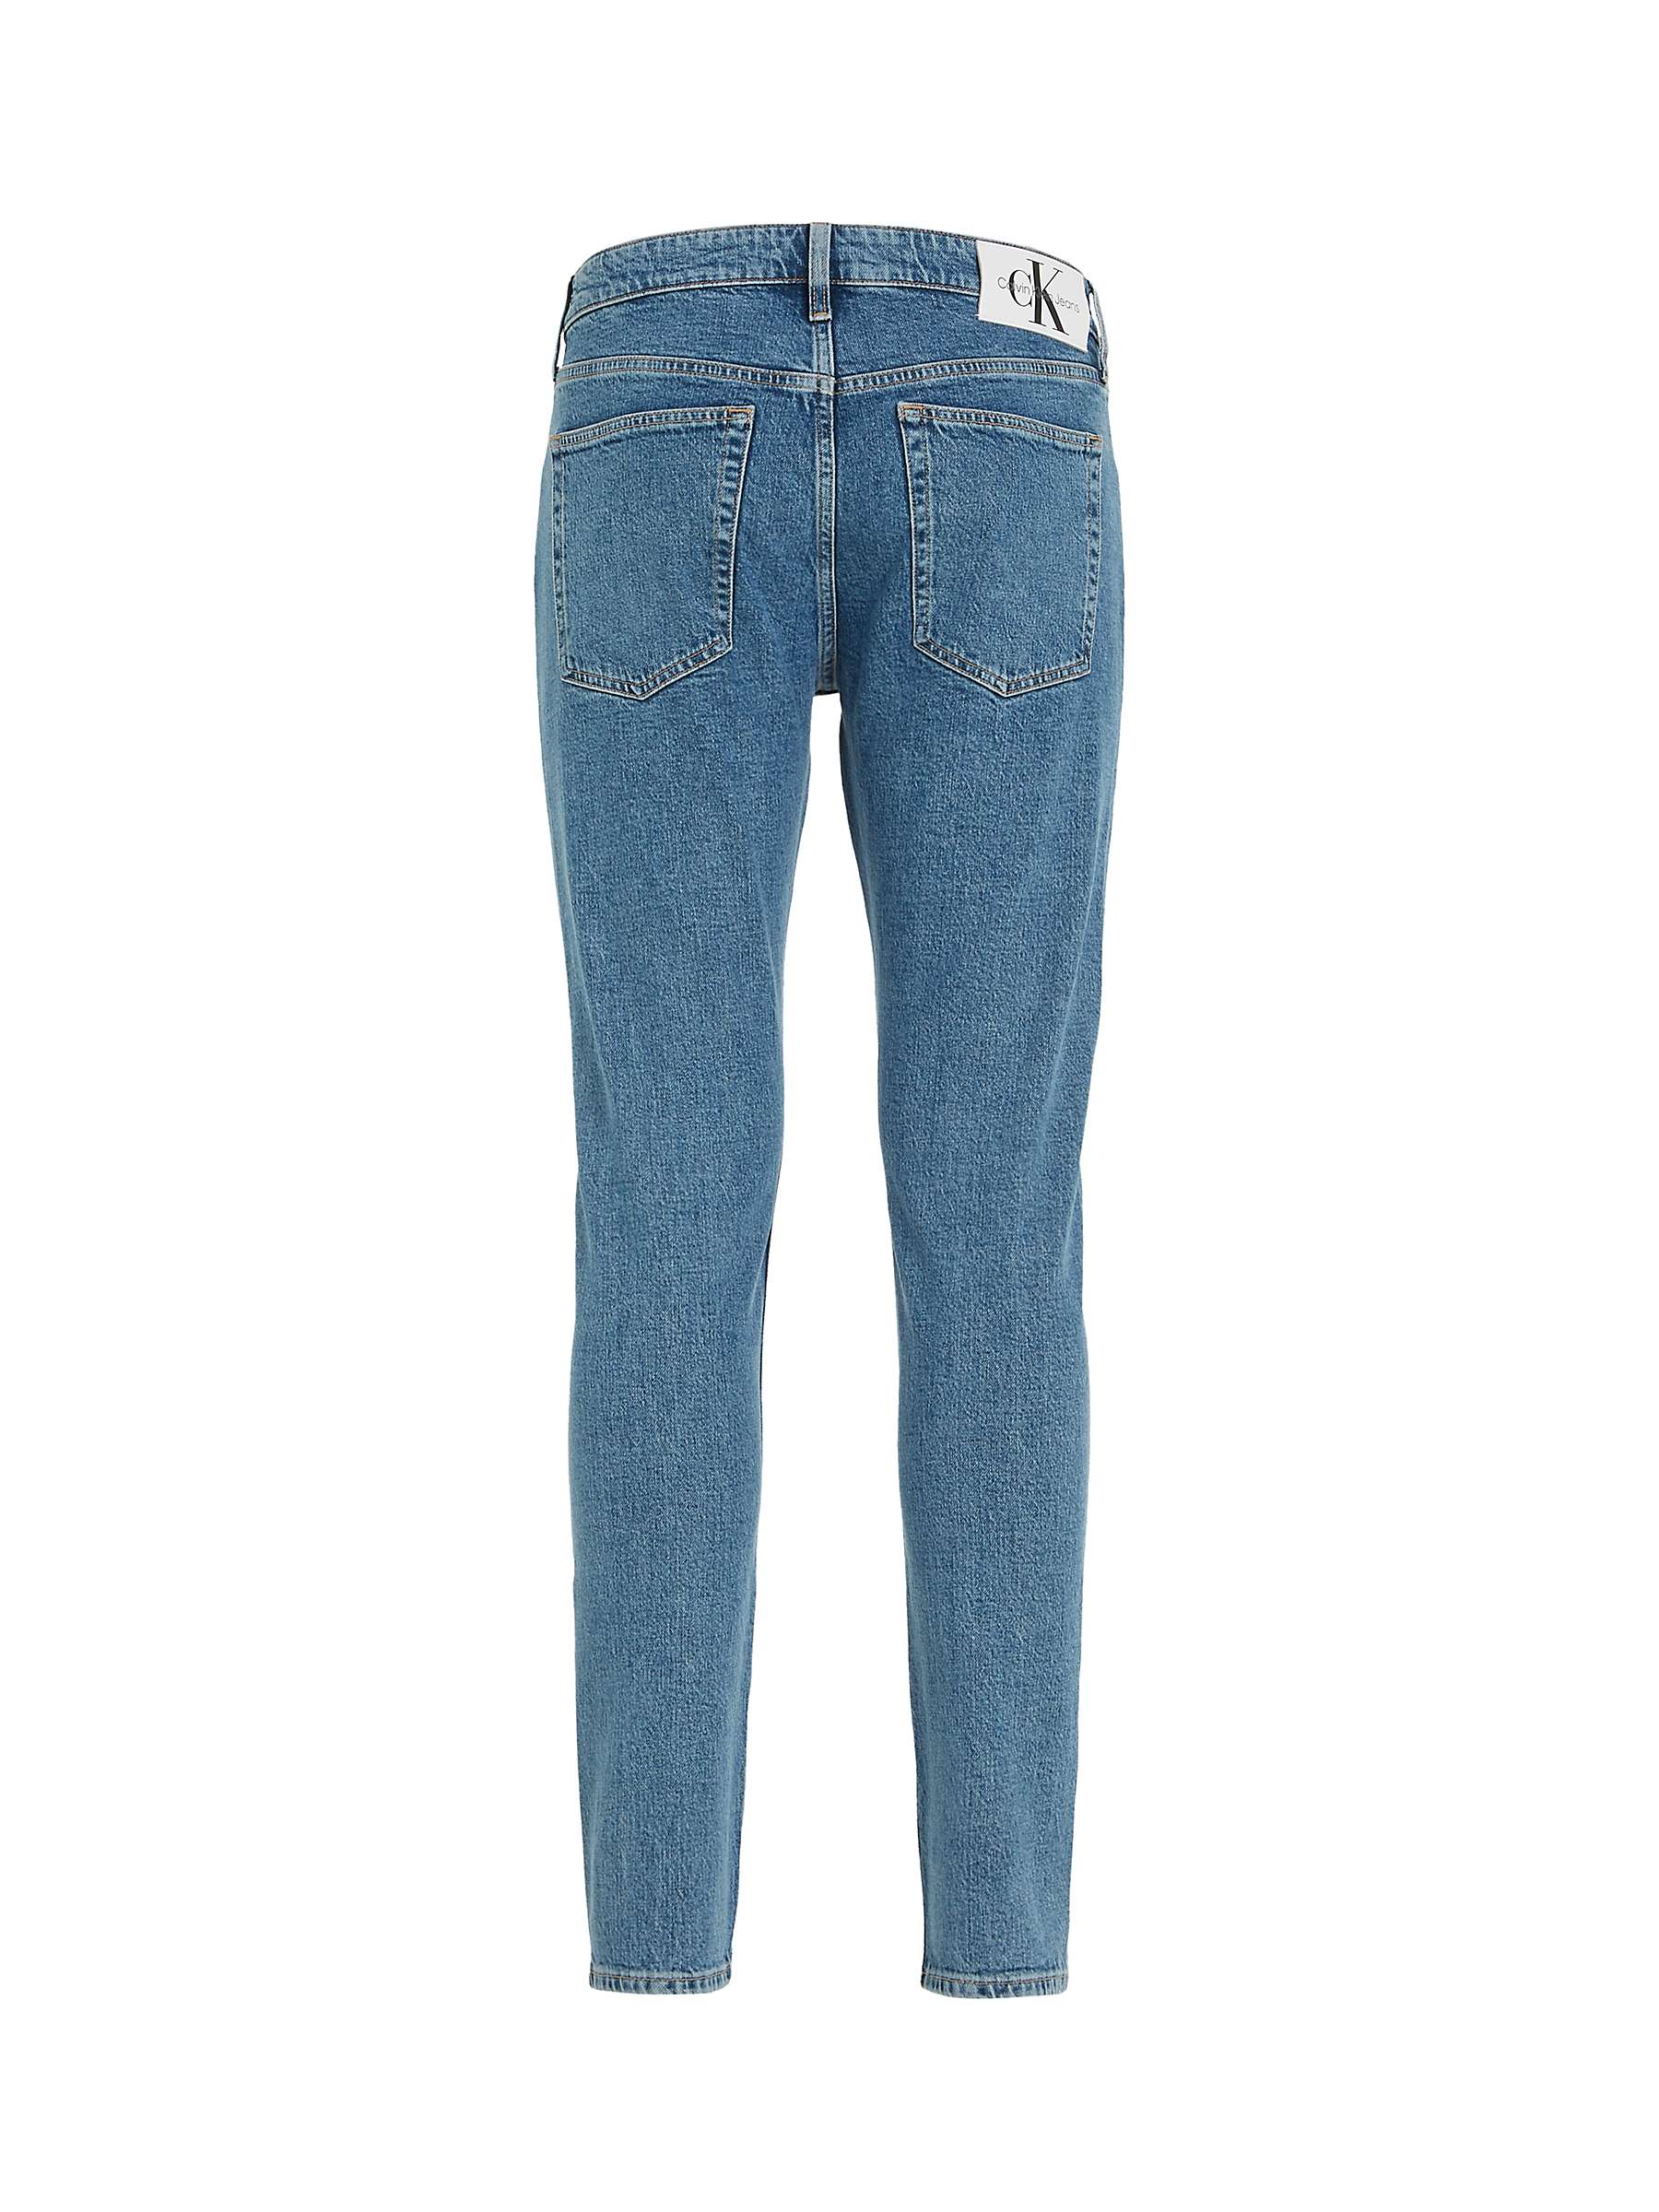 Buy Calvin Klein Jeans Slim Taper Jeans, Light Denim Online at johnlewis.com